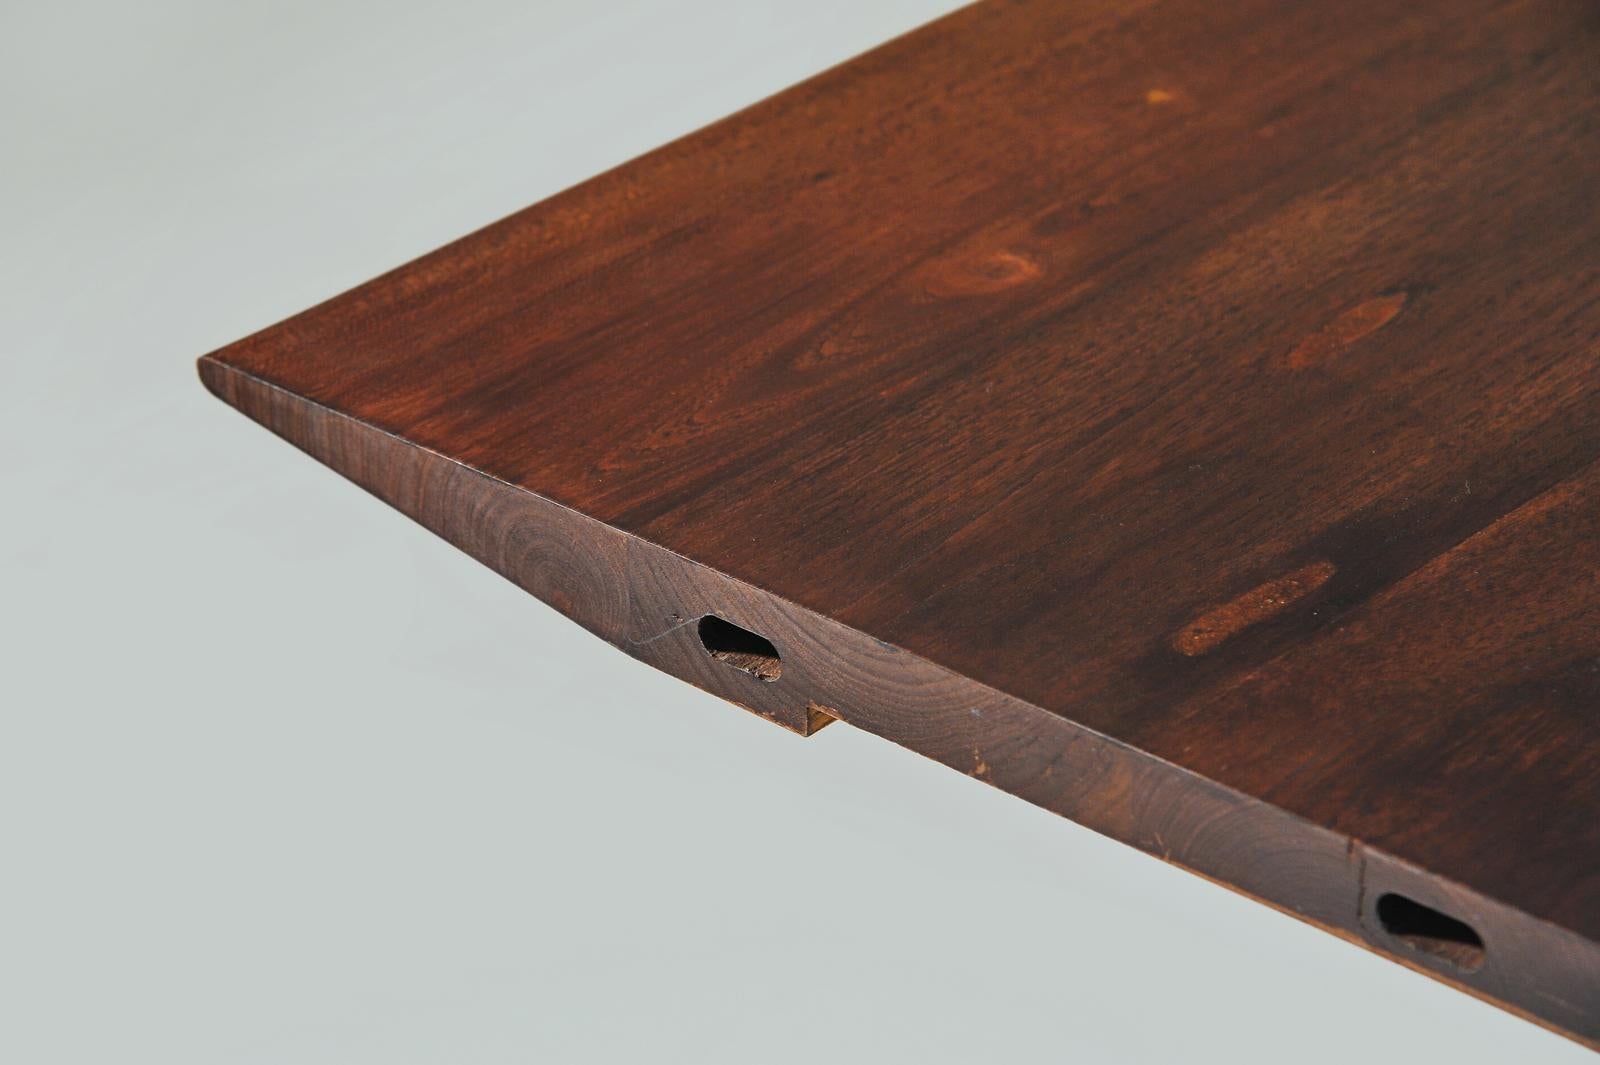 Bespoke Board Room Table, Reclaimed Wood, Sand Cast Brass Base, by P. Tendercool For Sale 1